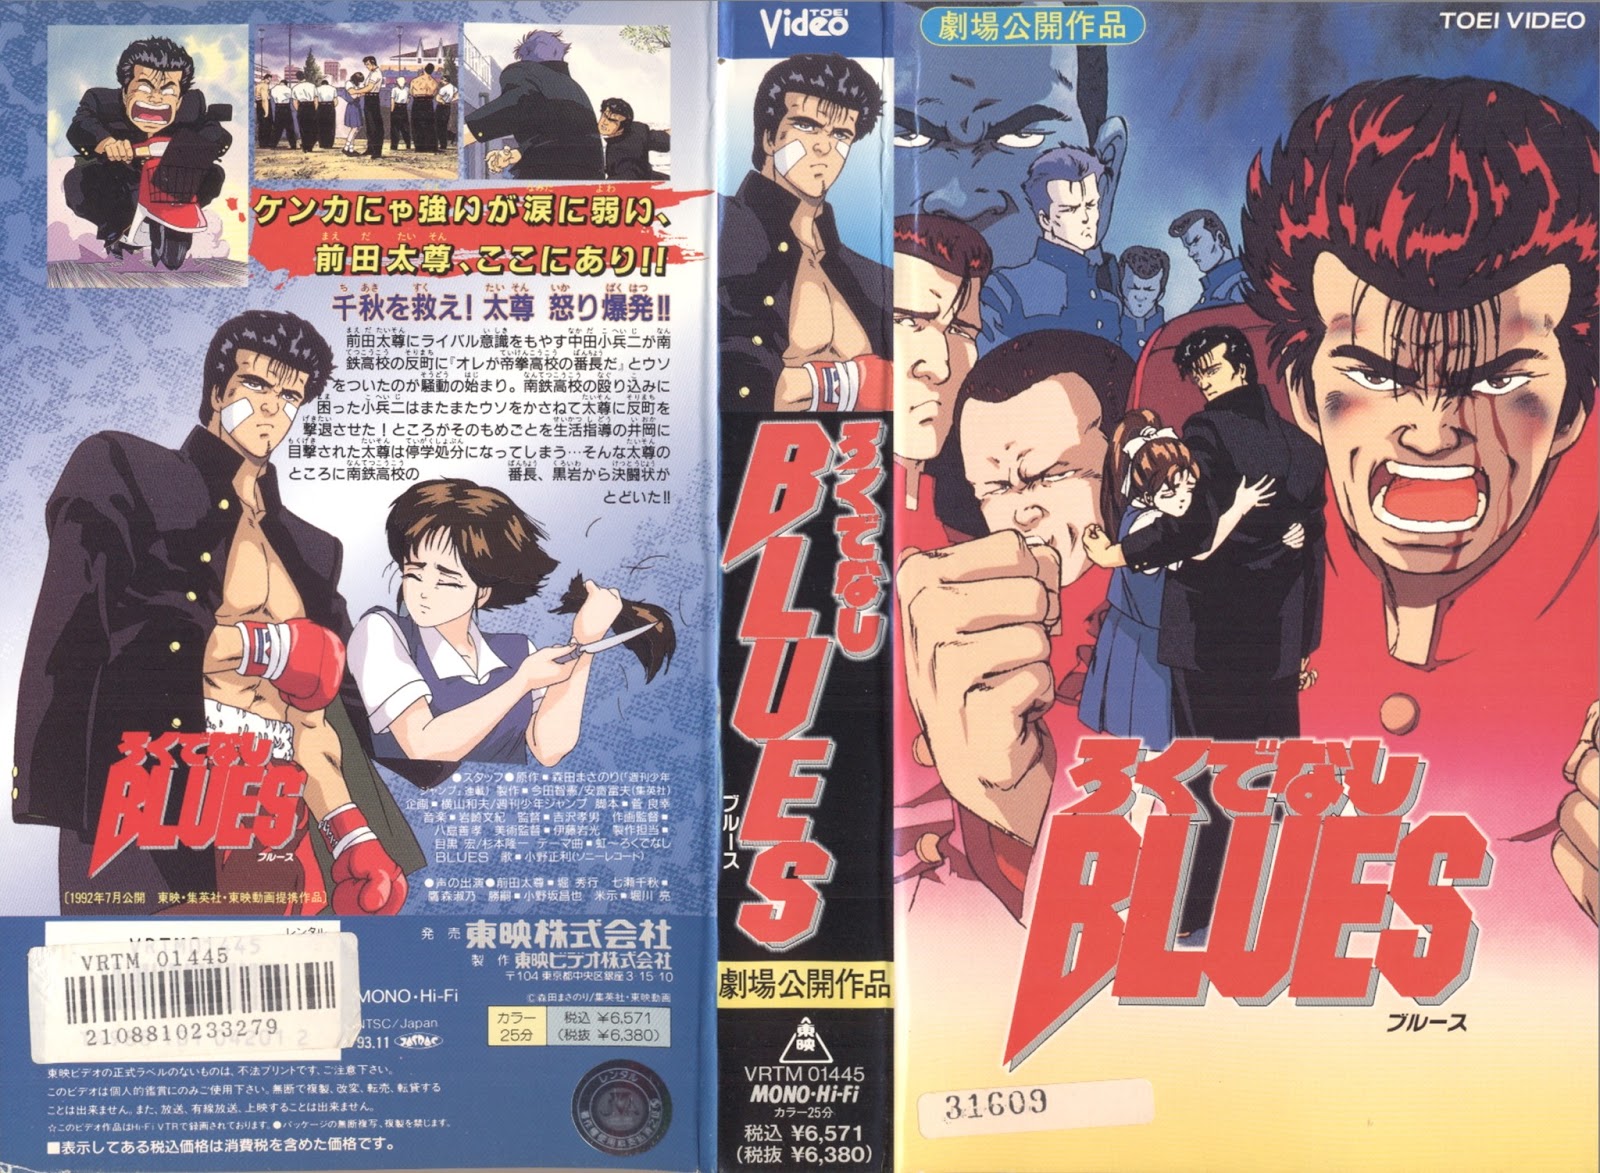 Rokudenashi Blues Vol. 13 by Masanori Morita